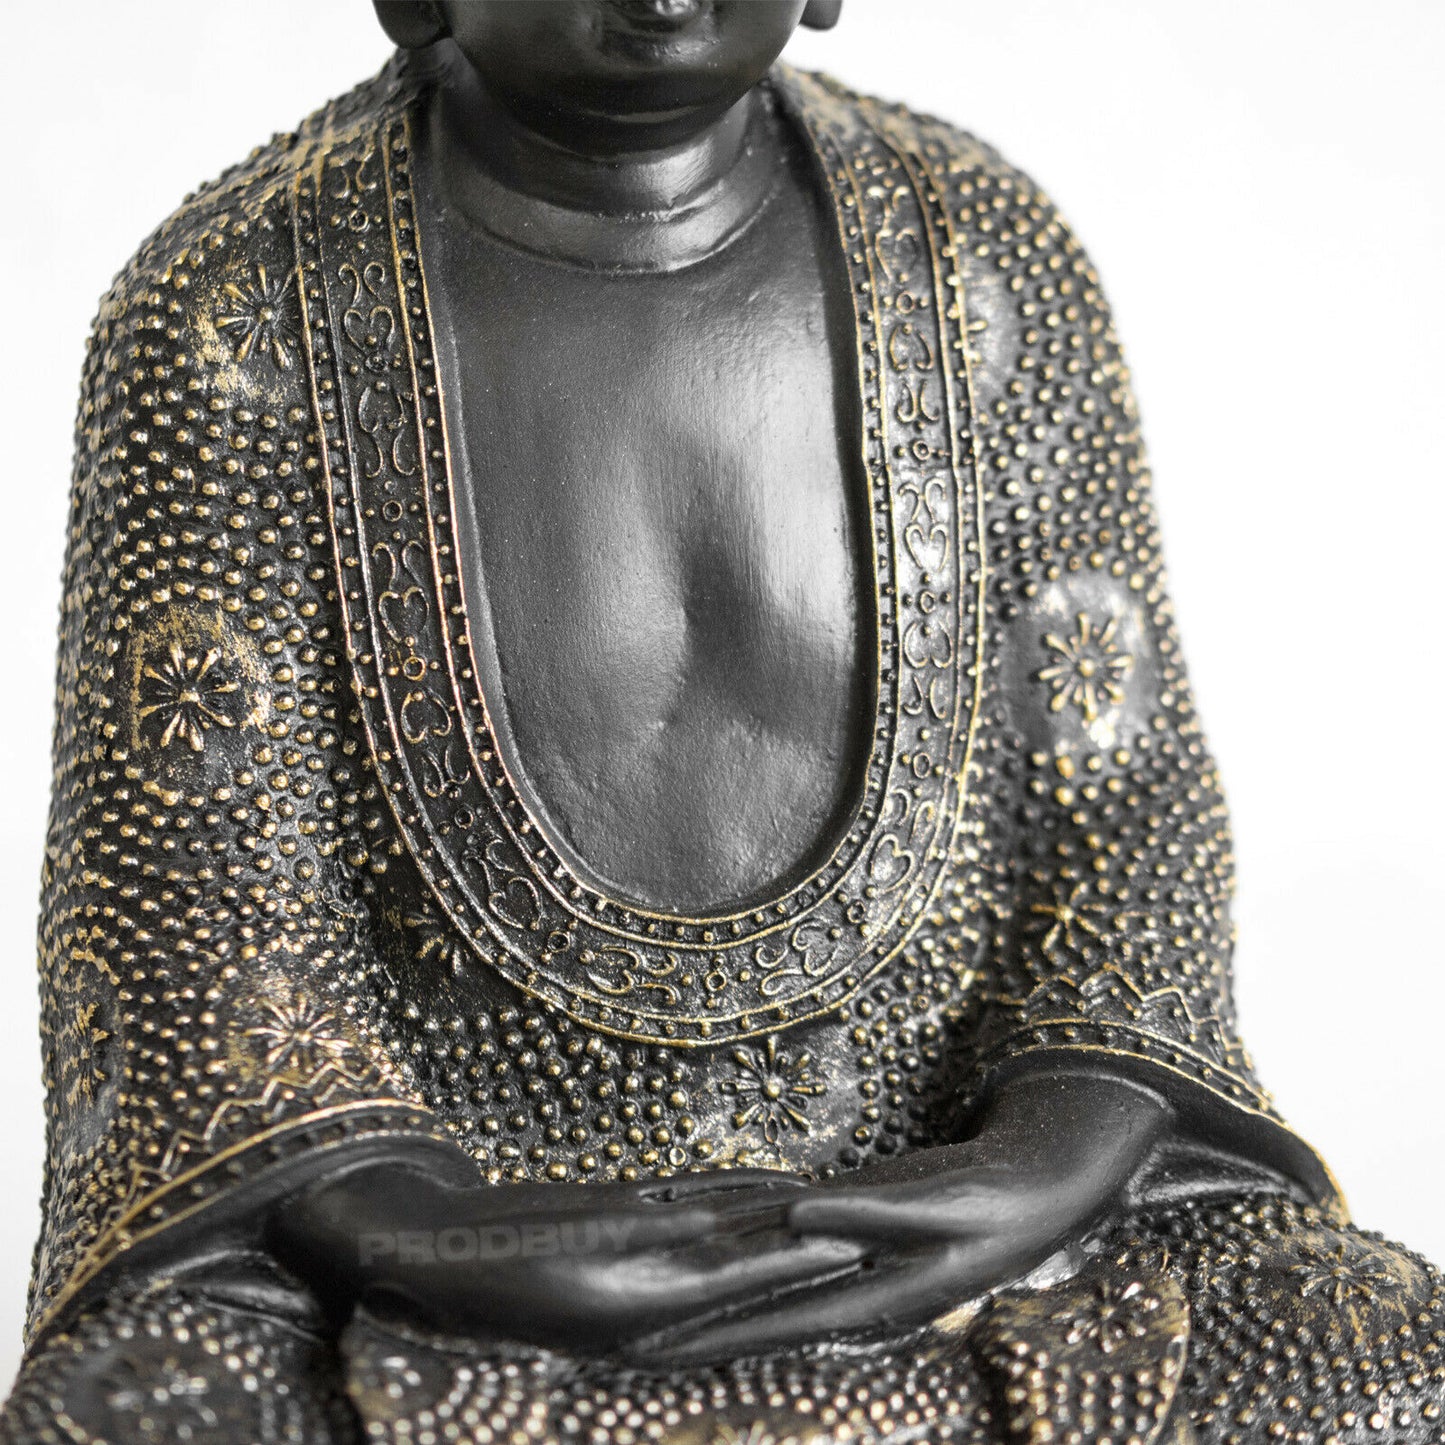 Black & Gold Sitting Buddha Ornament Scuplture